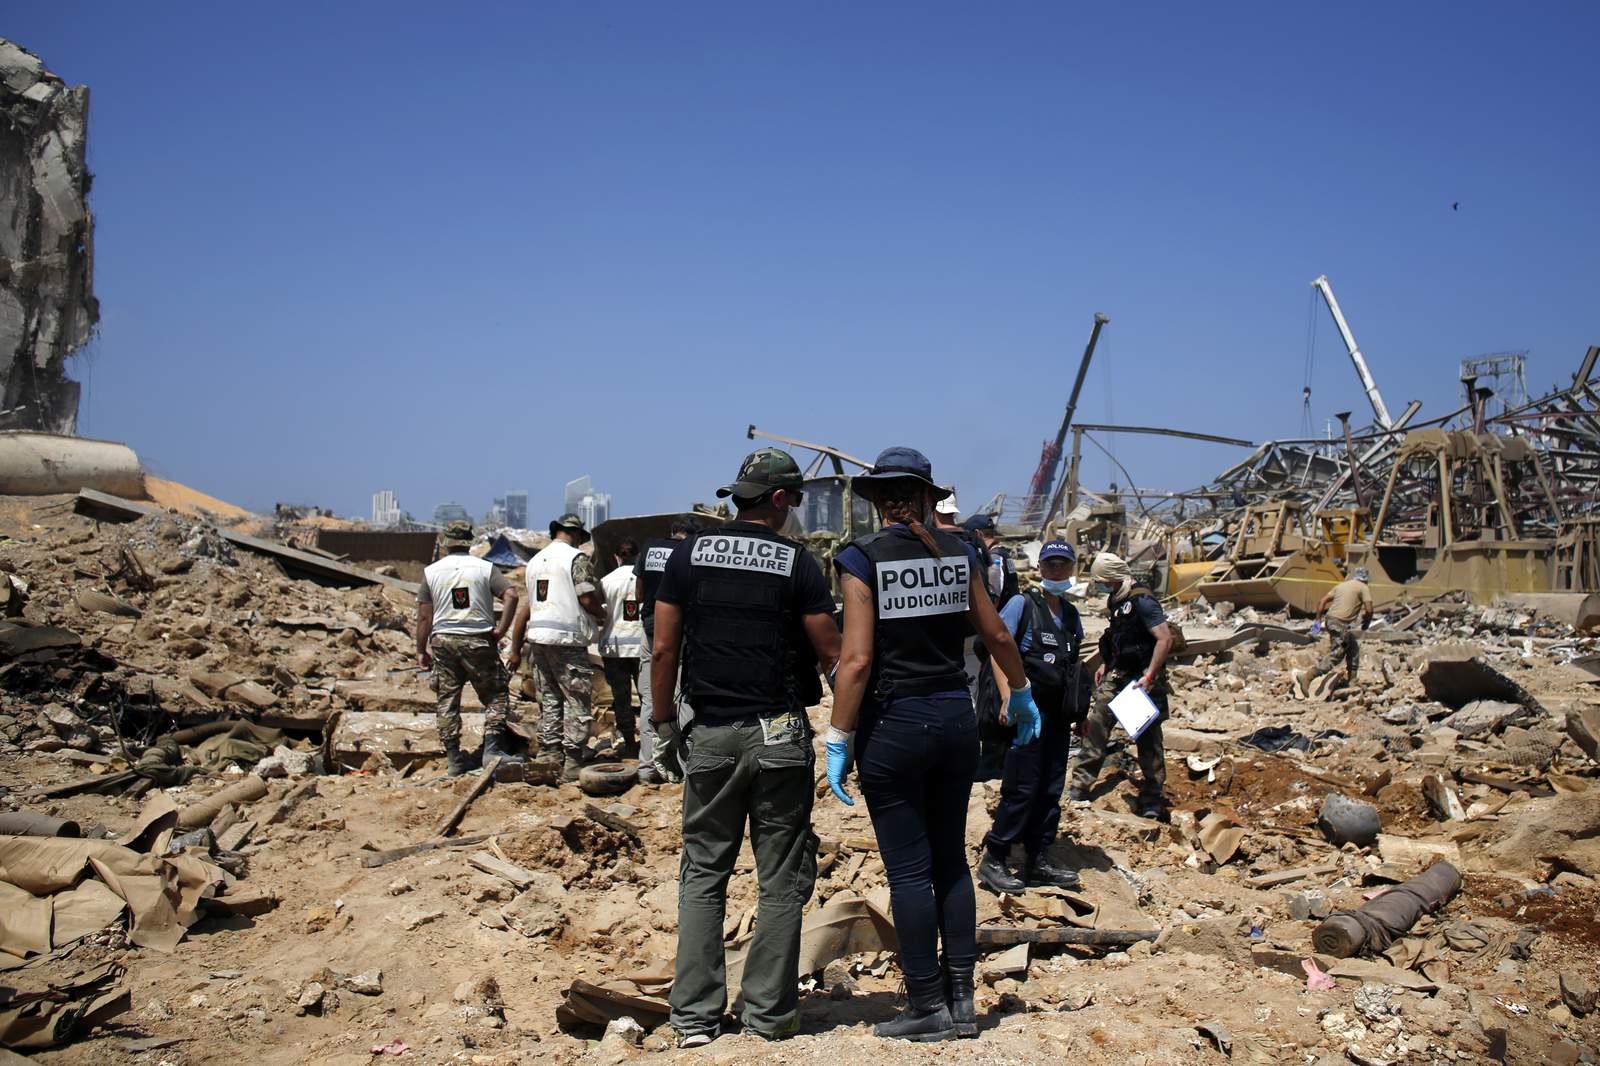 Lebanese president calls probe into Beirut blast "complex"